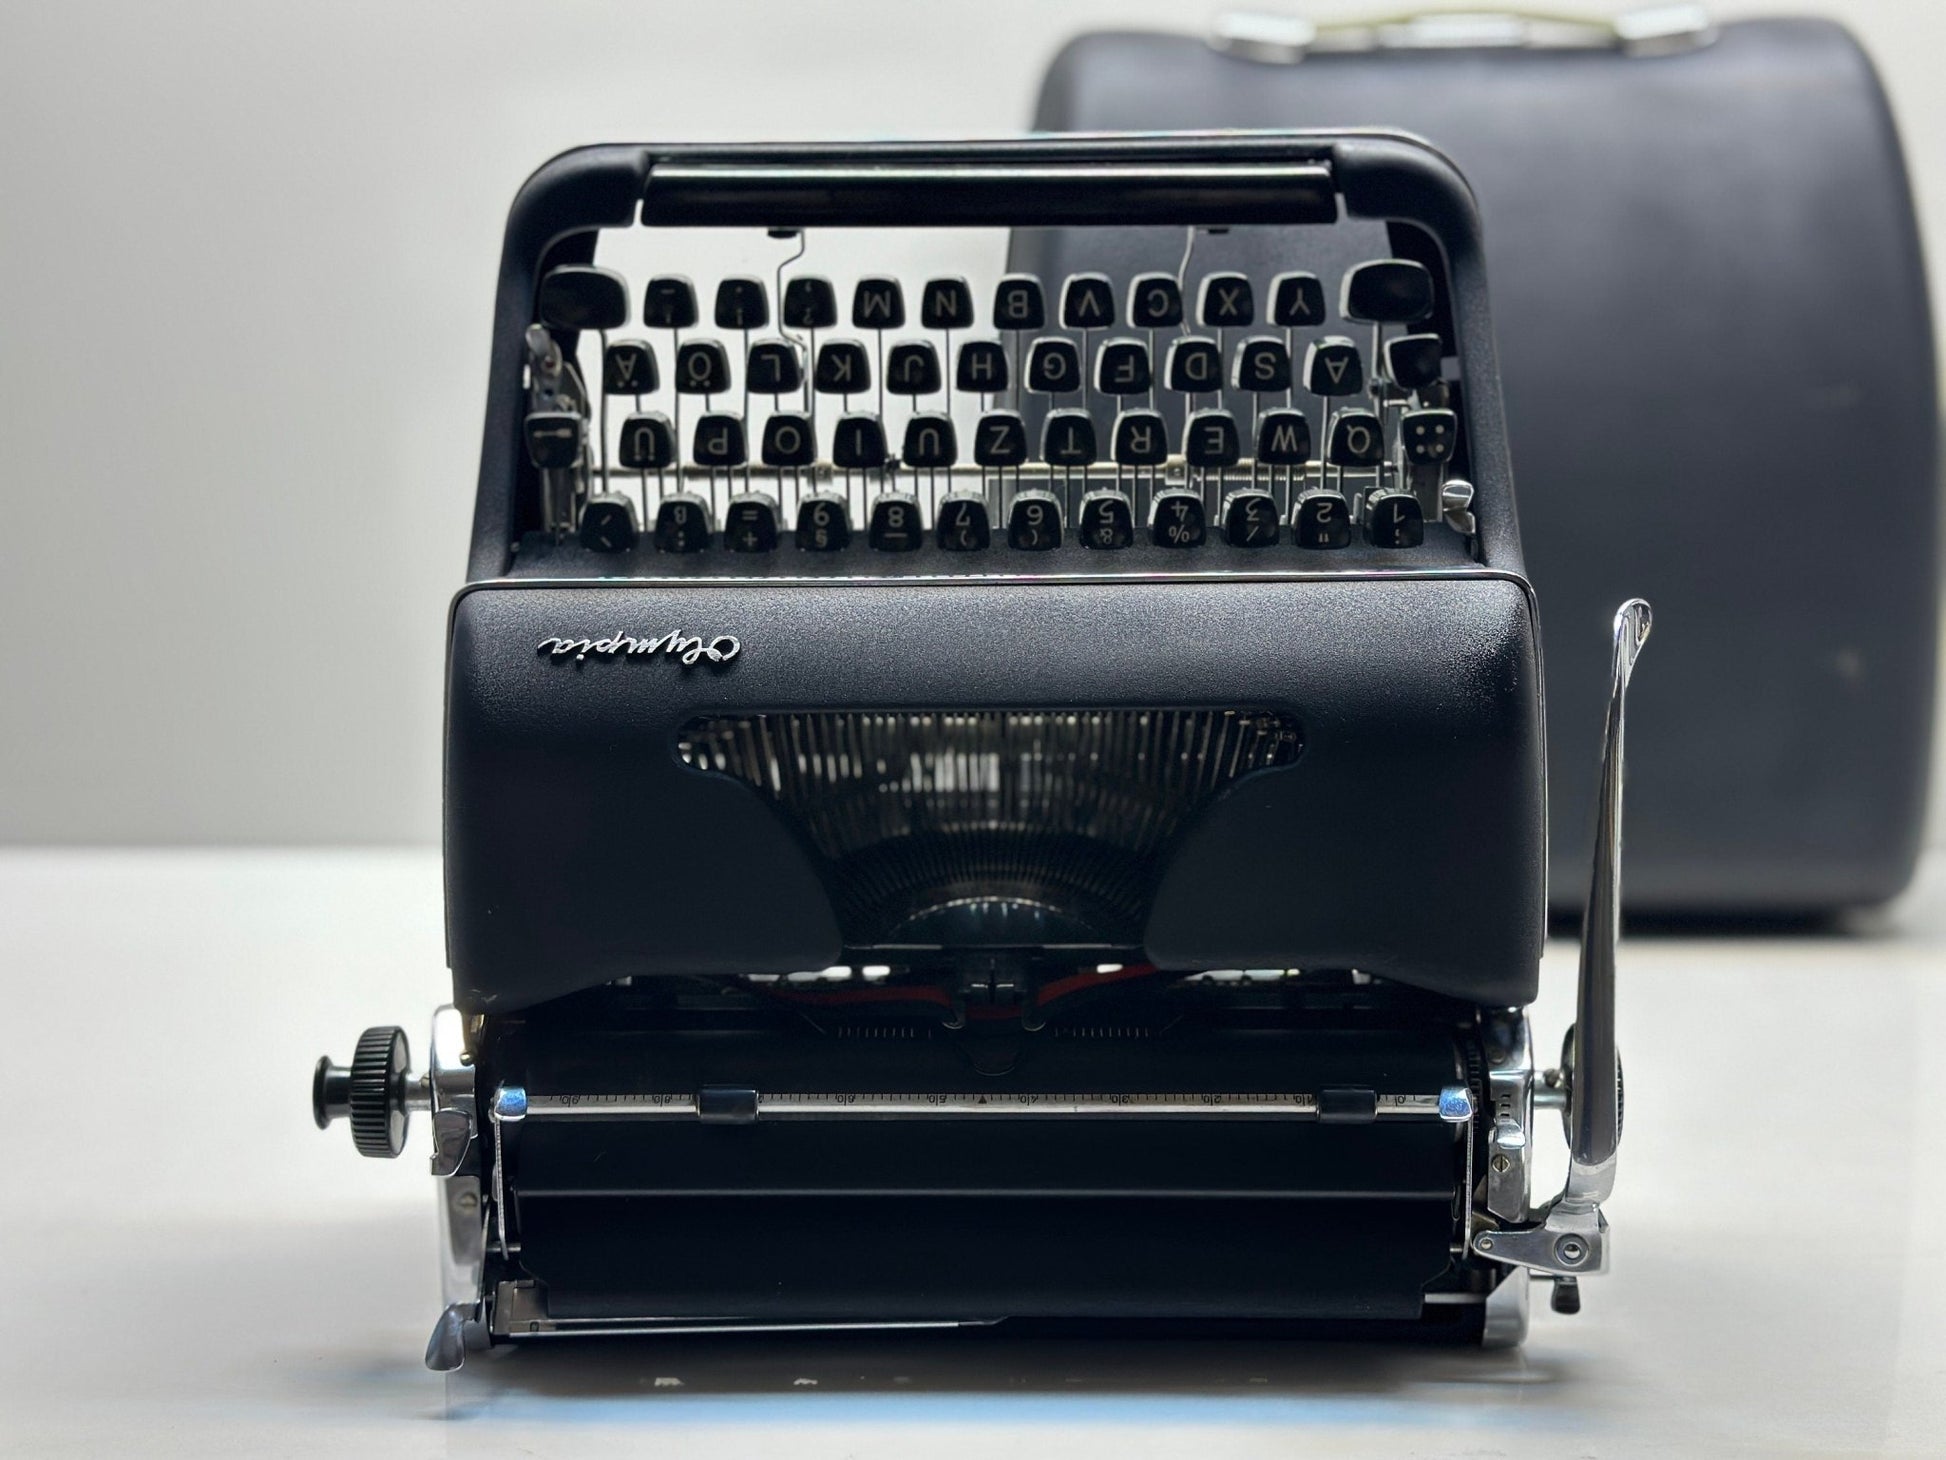 Olympia SM3 Black Typewriter - Premium Quality, Highly Preferred Model, QWERTY Option, Custom Black Case, Panther-Like Elegance,Best Gift